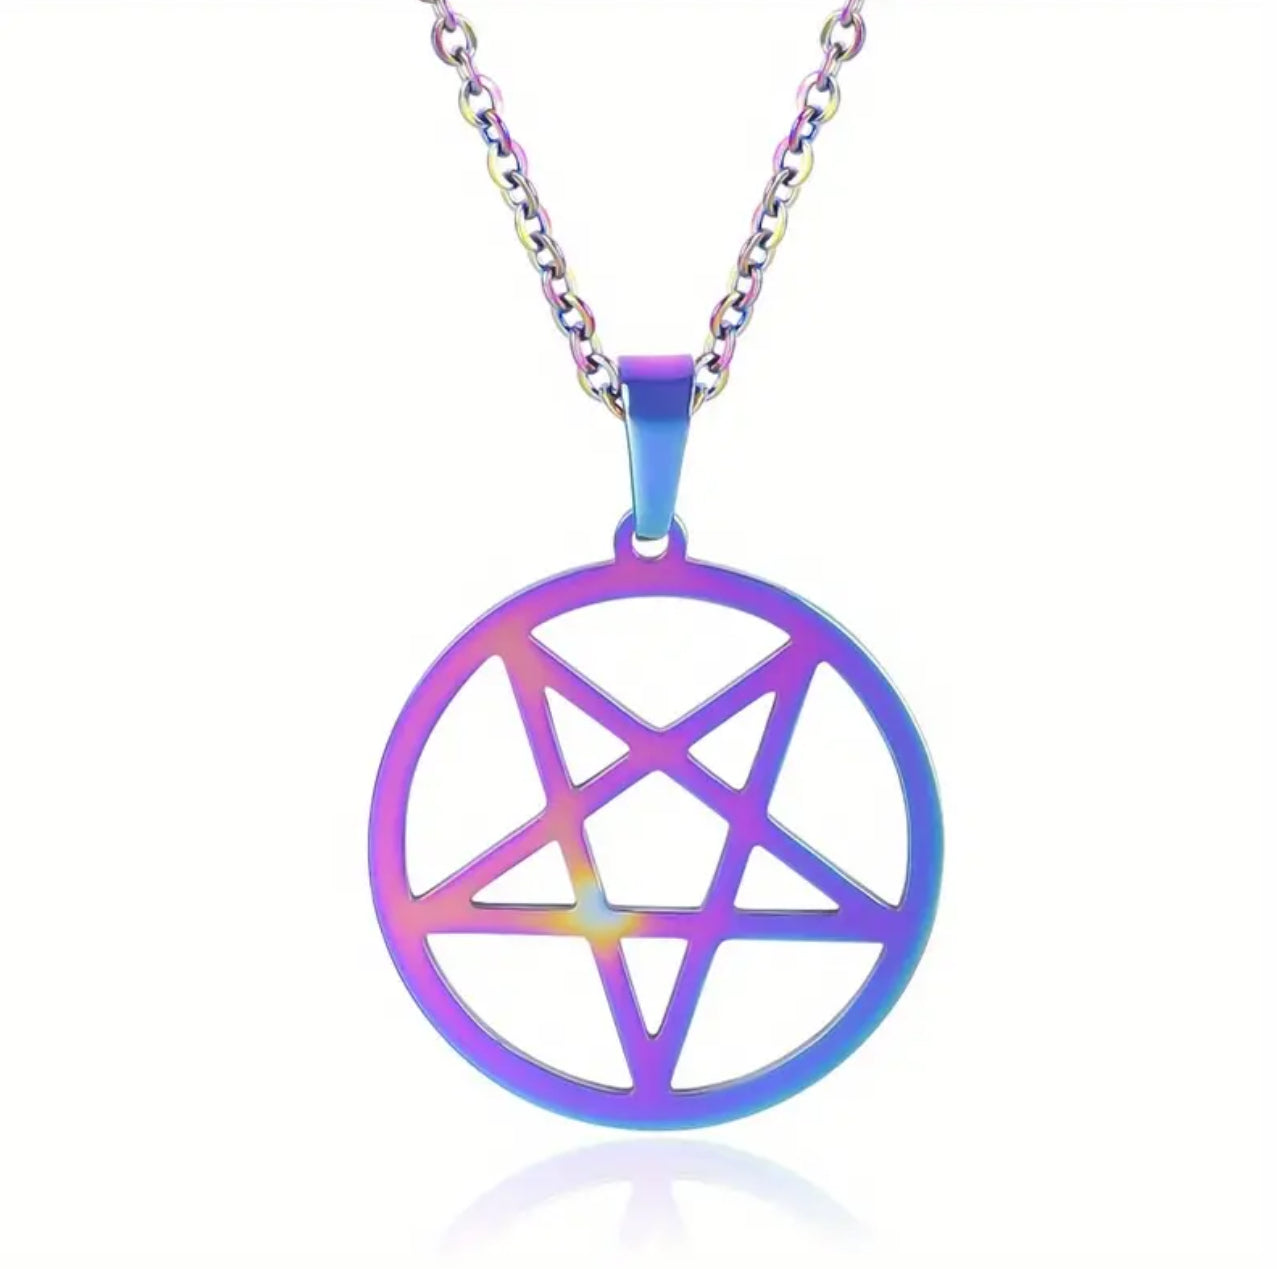 Stainless Steel Iridescent Inverted Pentagram Necklace